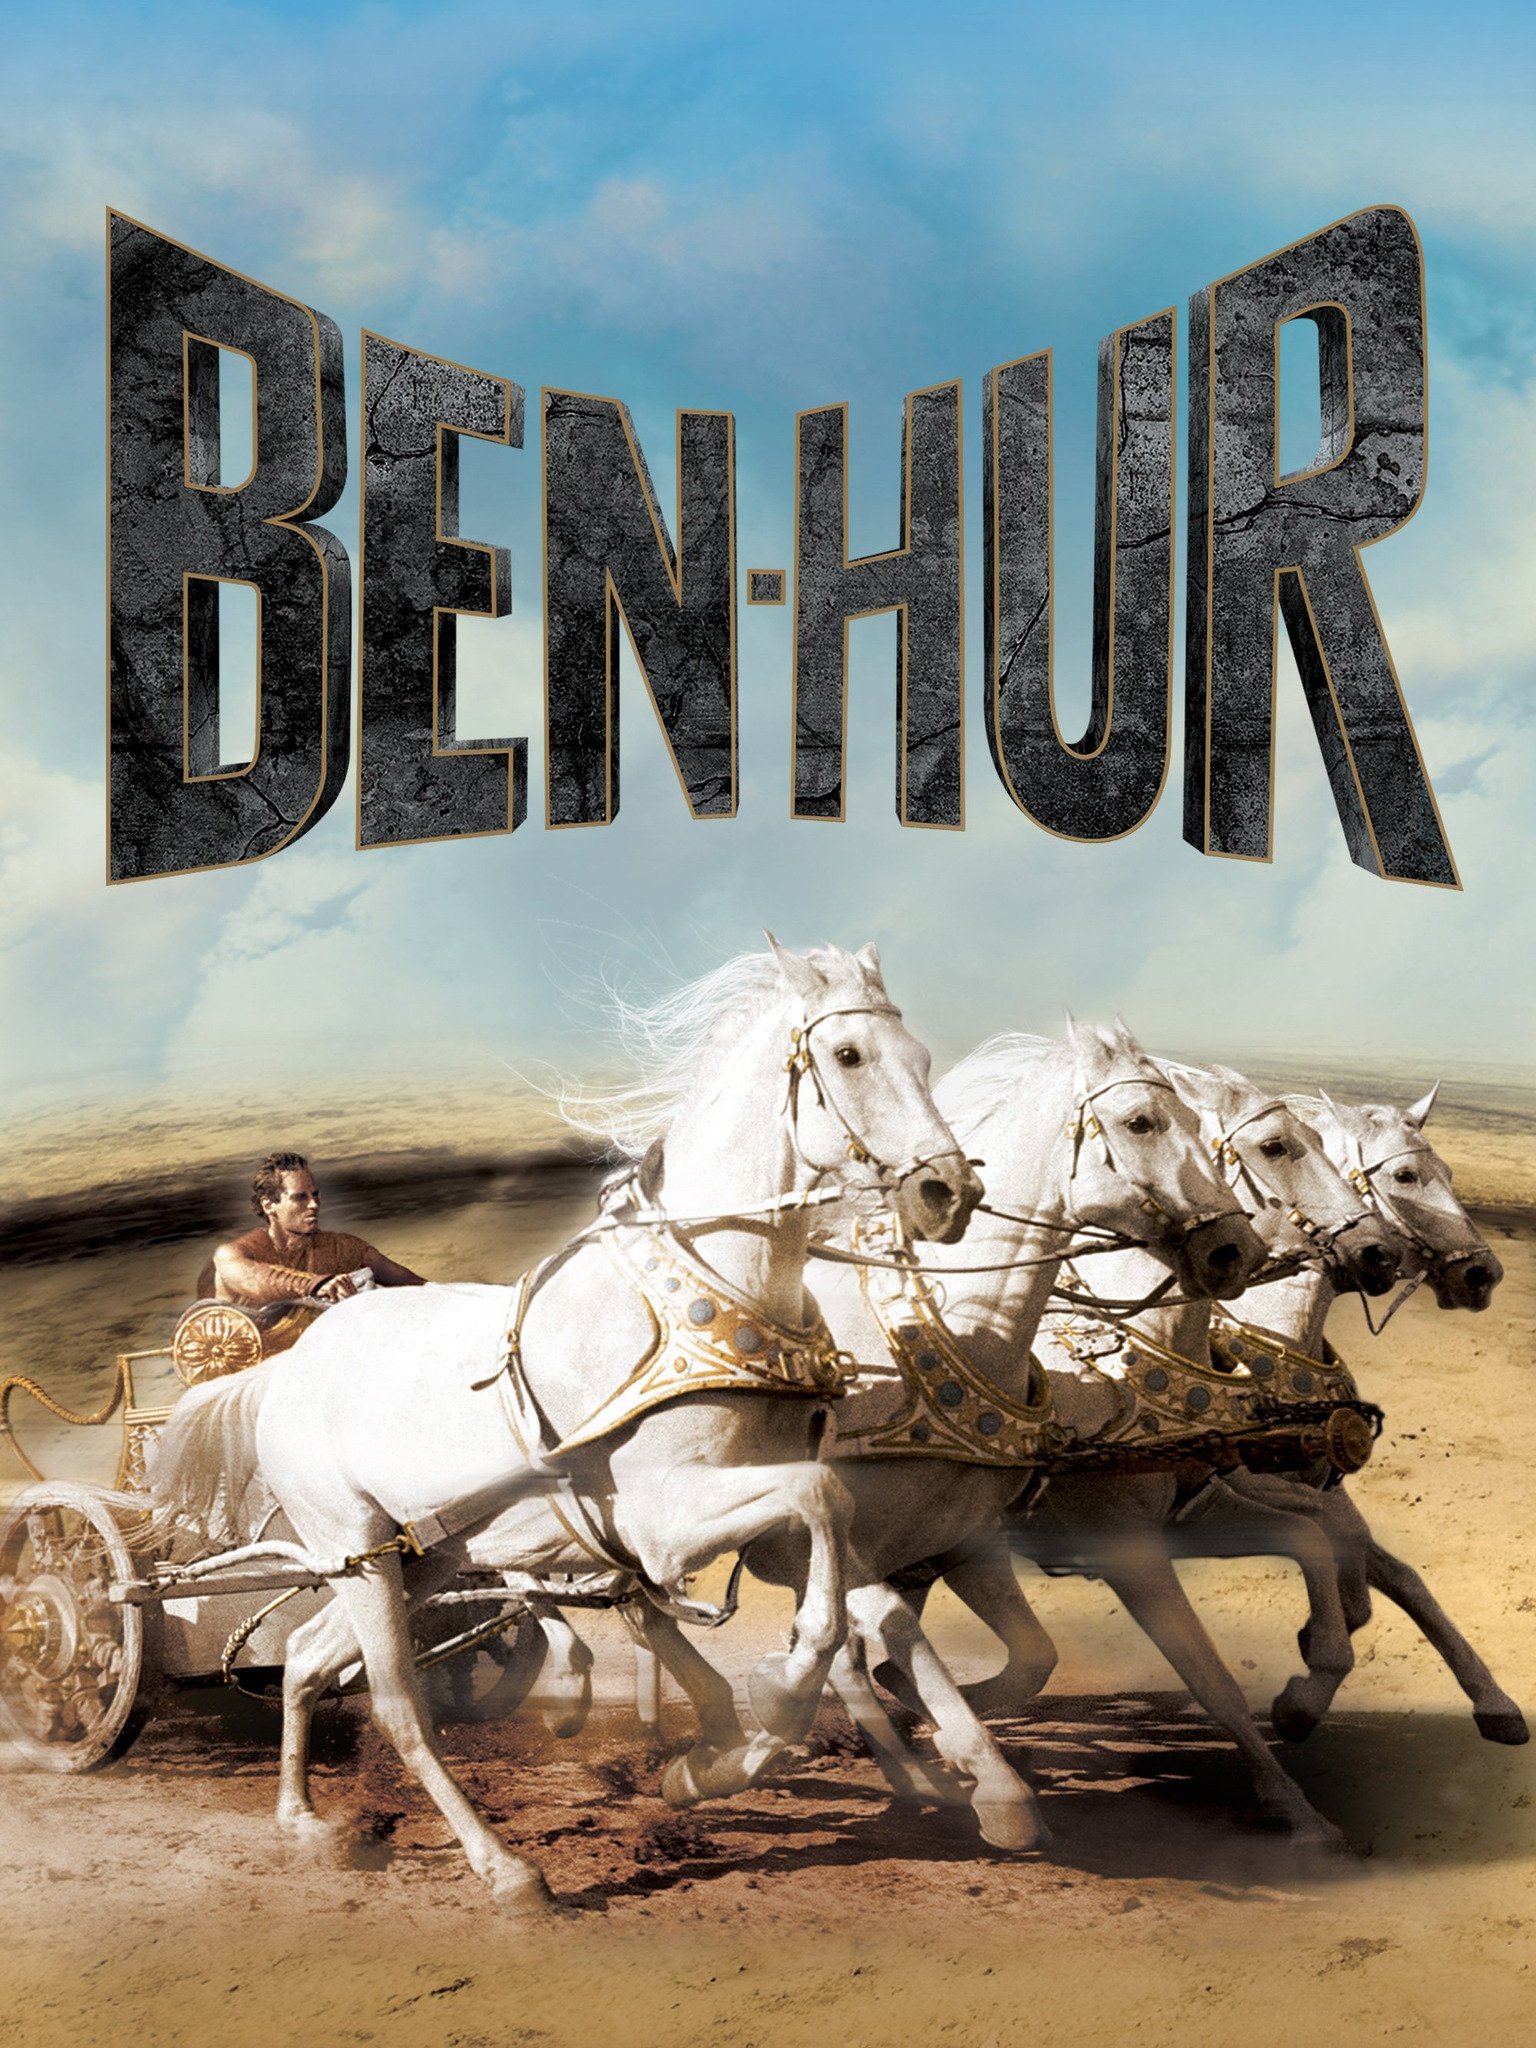 Ben-Hur - Movie Reviews.